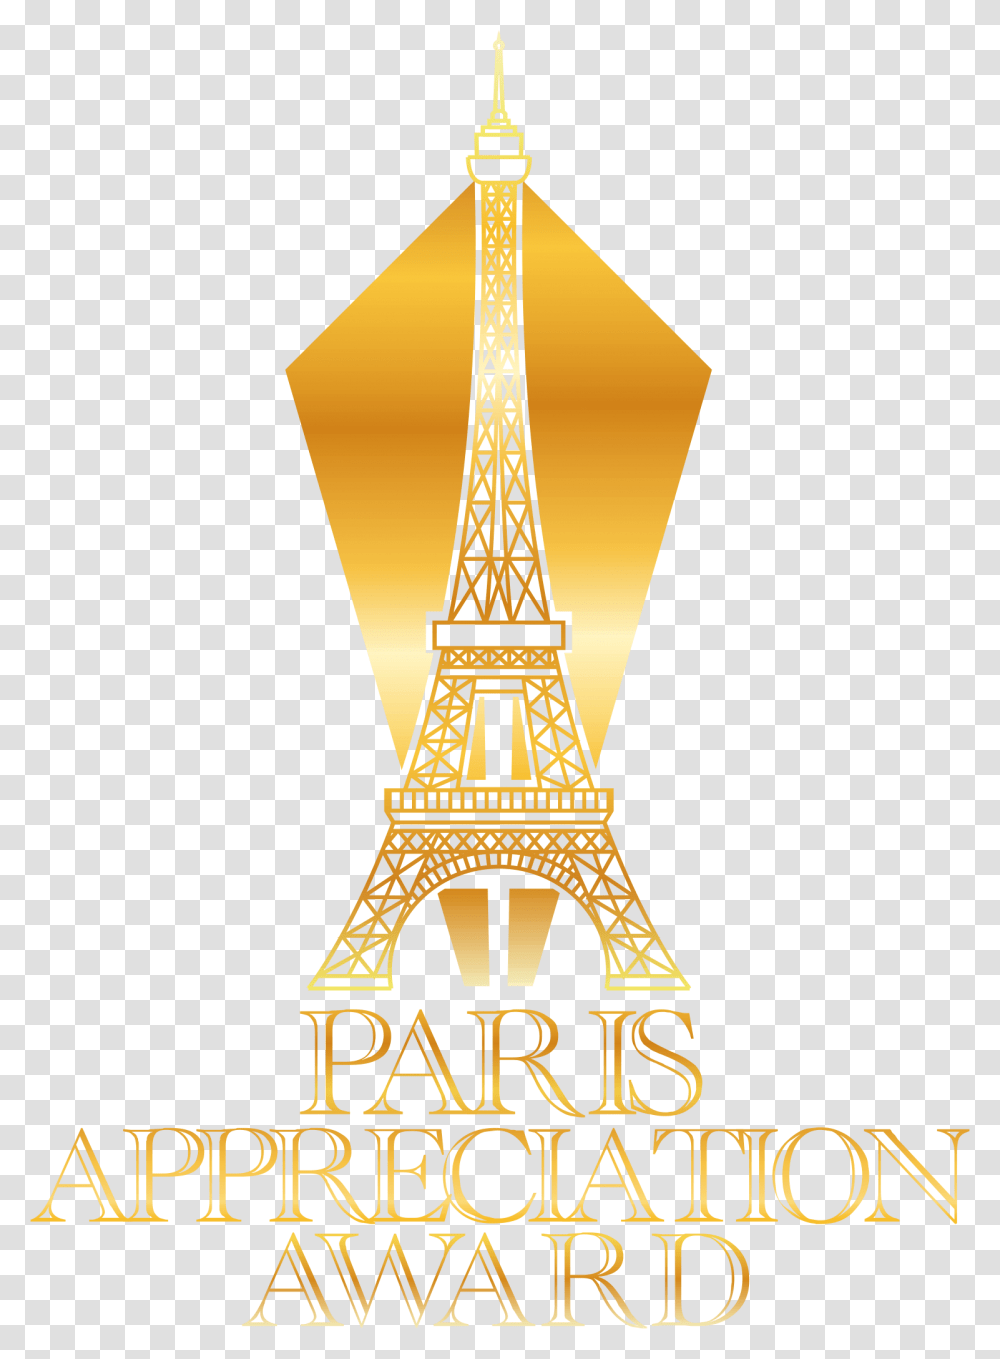 Paris Appreciation Awards On Top Of The Eiffel Tower Graphic Design, Architecture, Building, Monument Transparent Png